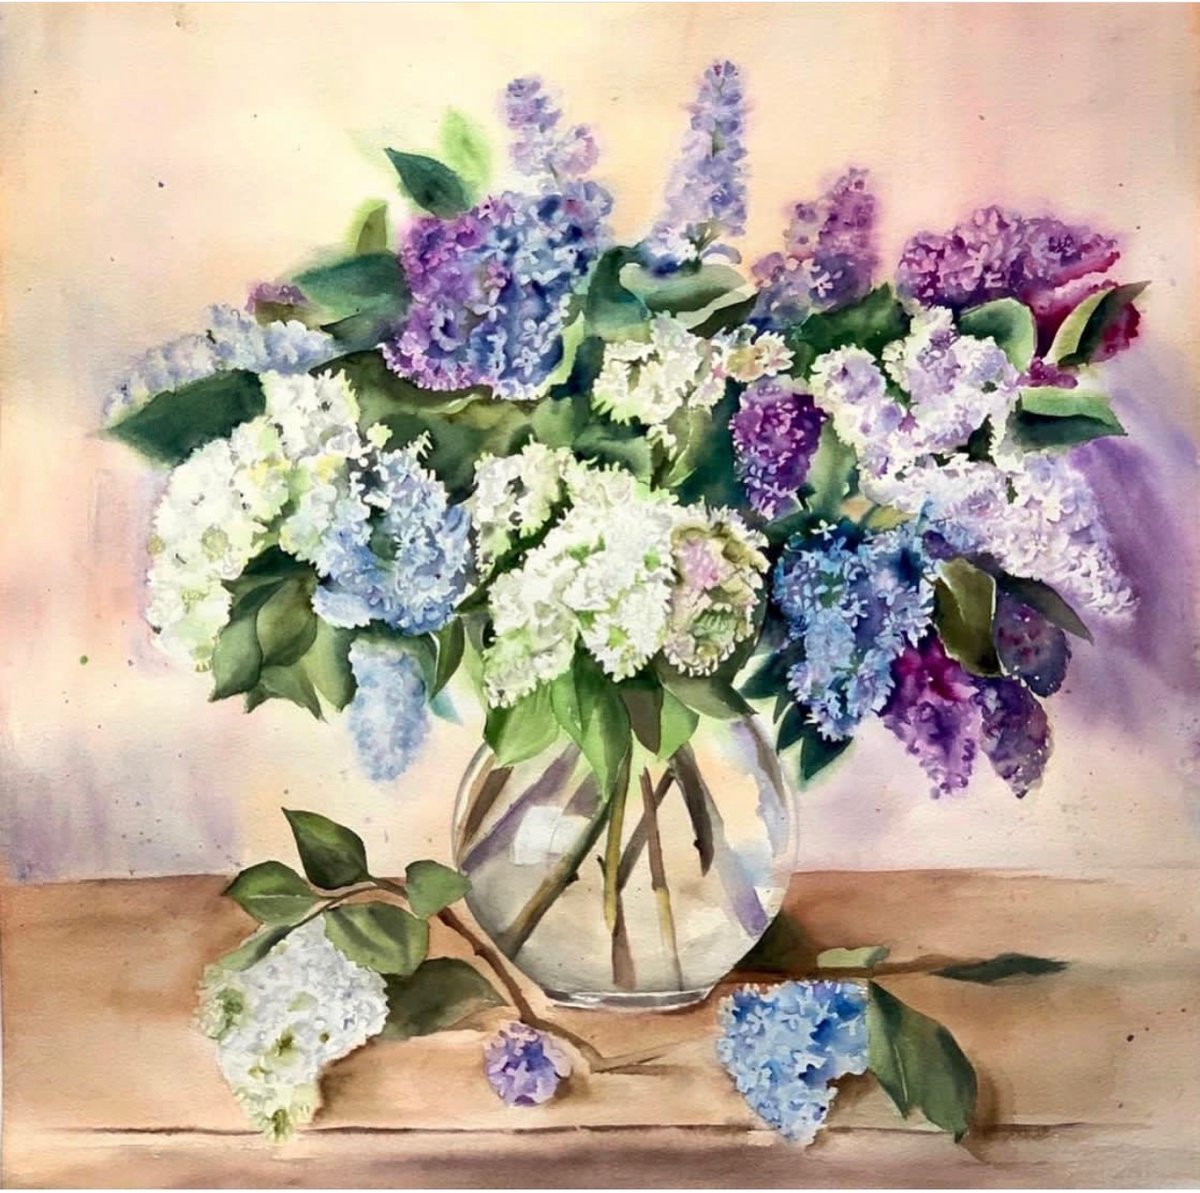 Lilac in a vase by Irina Ponna